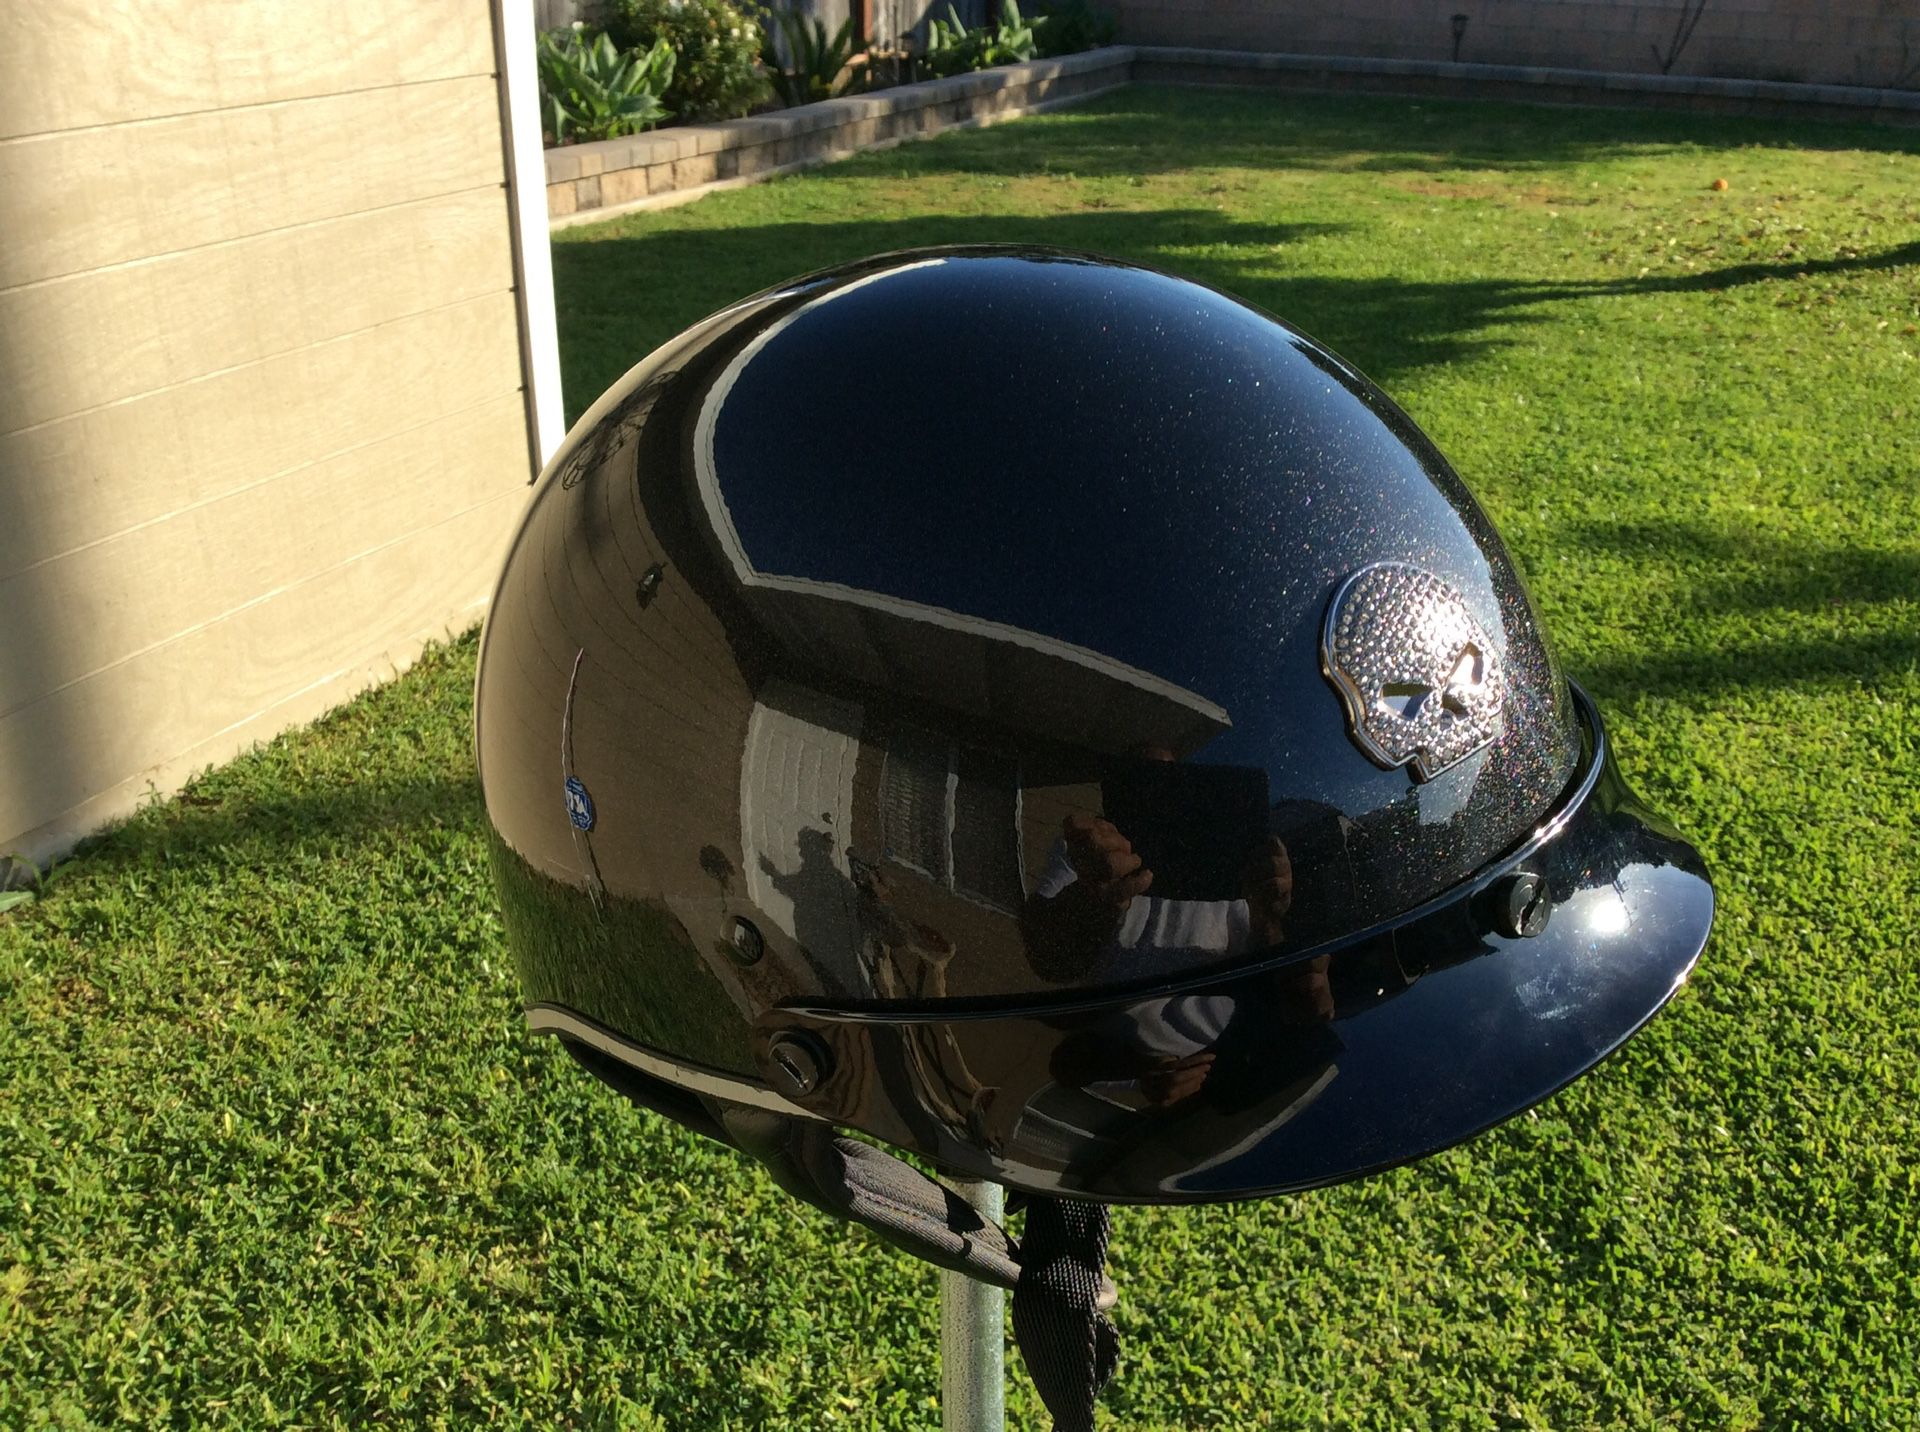 Harley Davidson women’s size small helmet